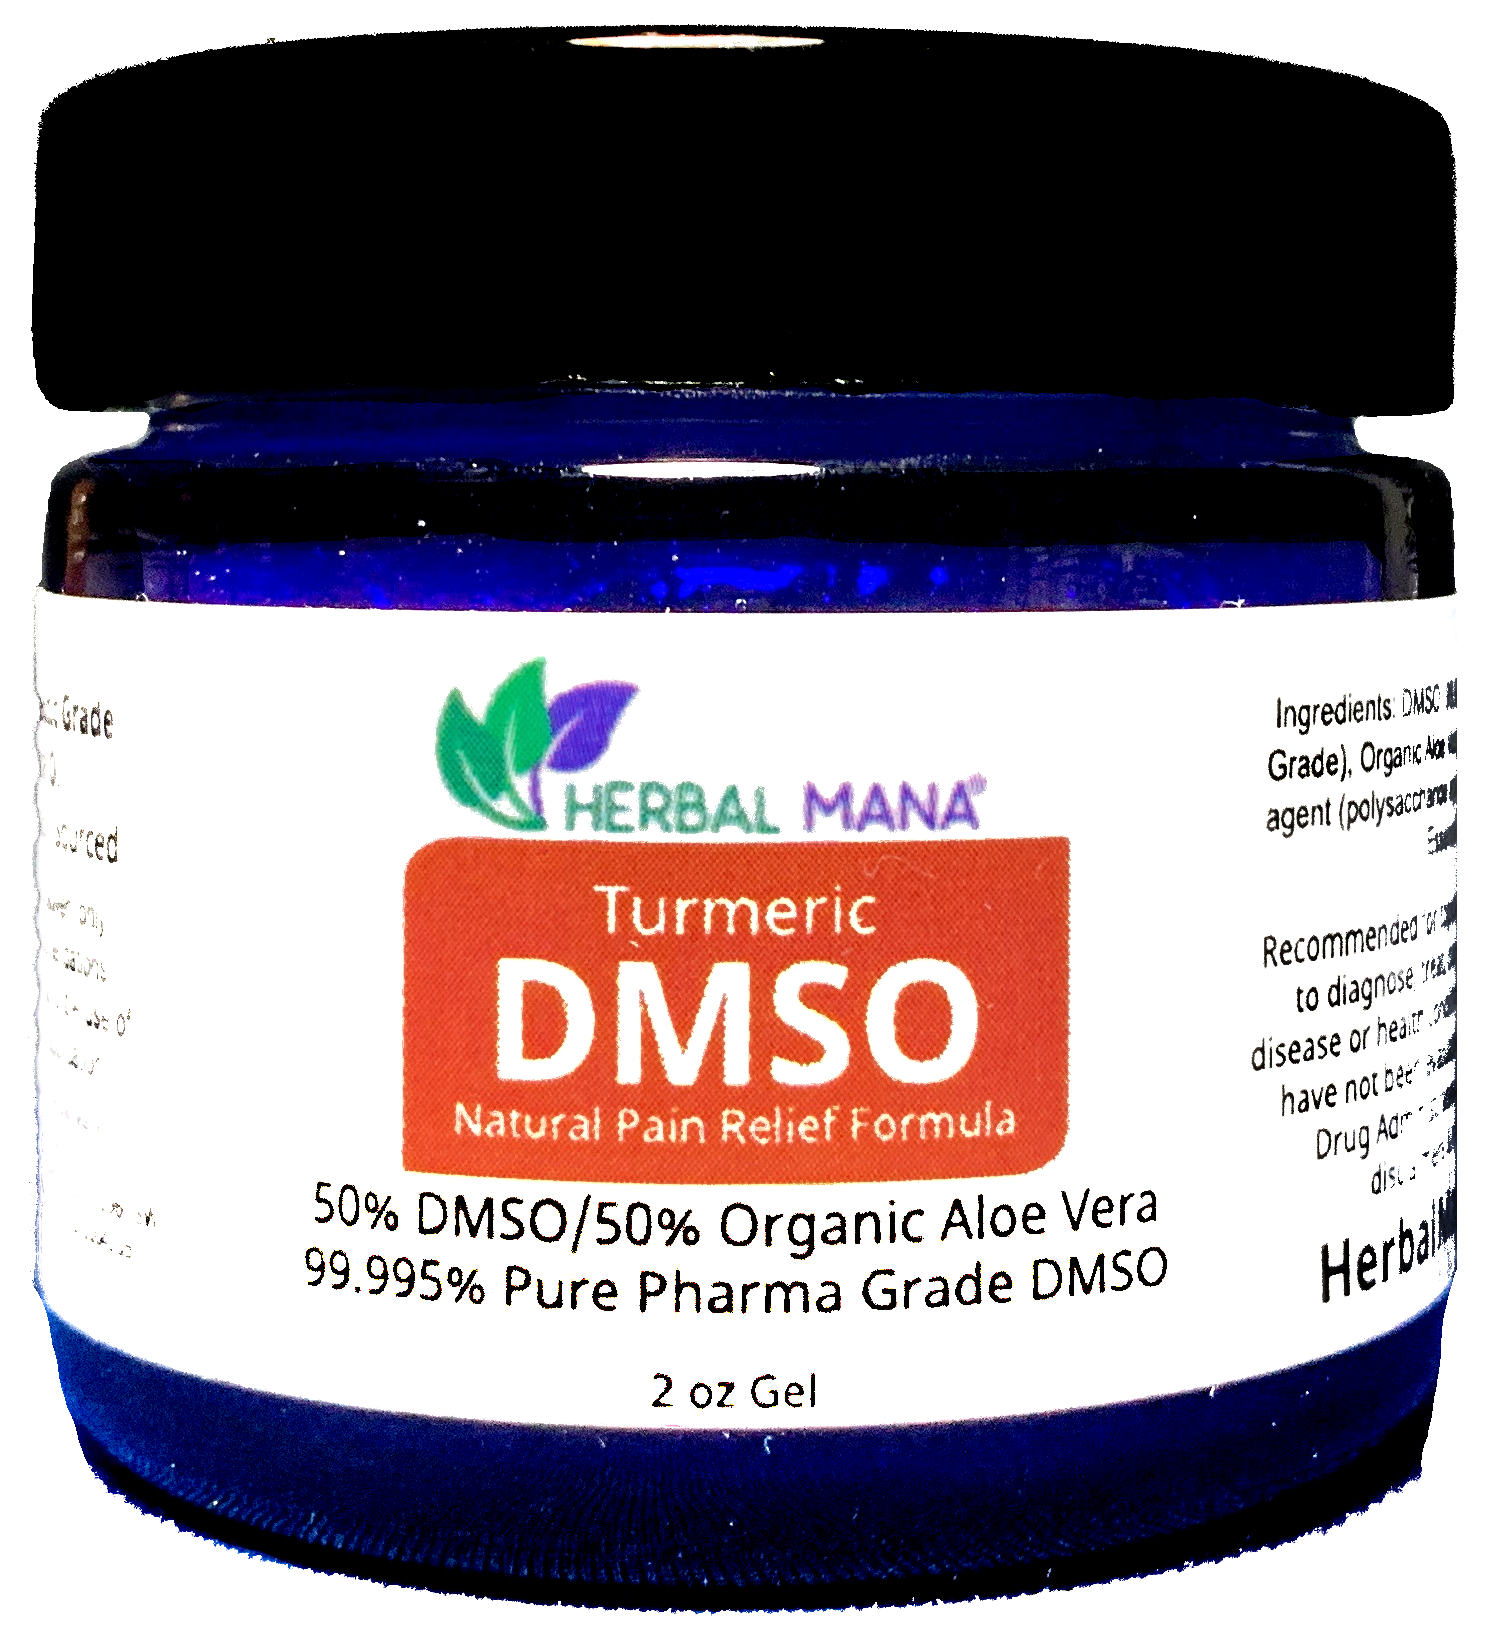 Turmeric DMSO by Herbal Mana